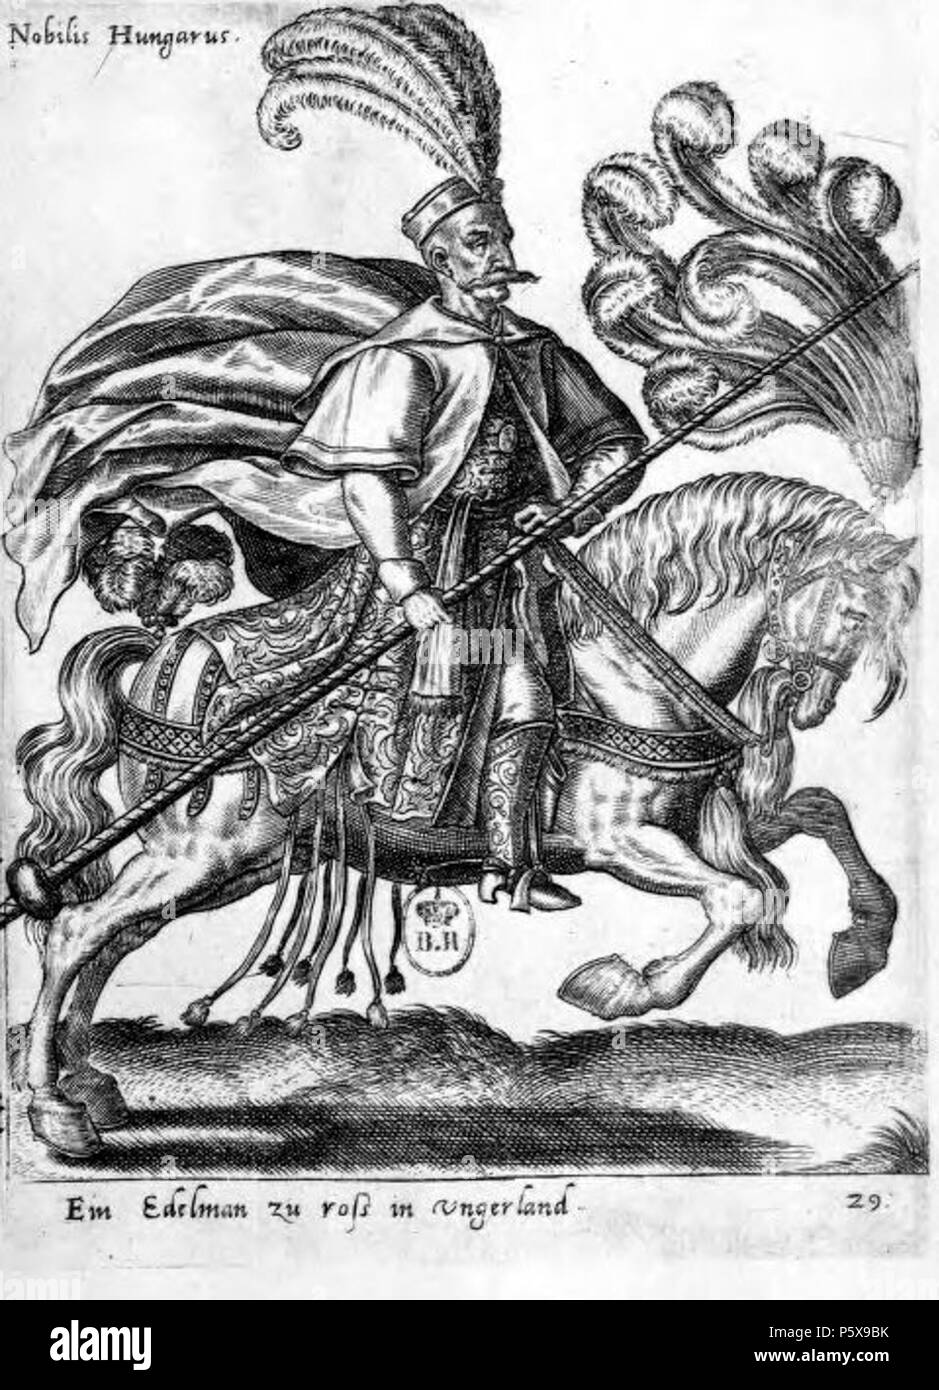 458 Diversarum Gentium Armatura Equestris Nobilis Hungarus (Noble hongrois à cheval. Kostüm et équipements Militaires.) Stockfoto